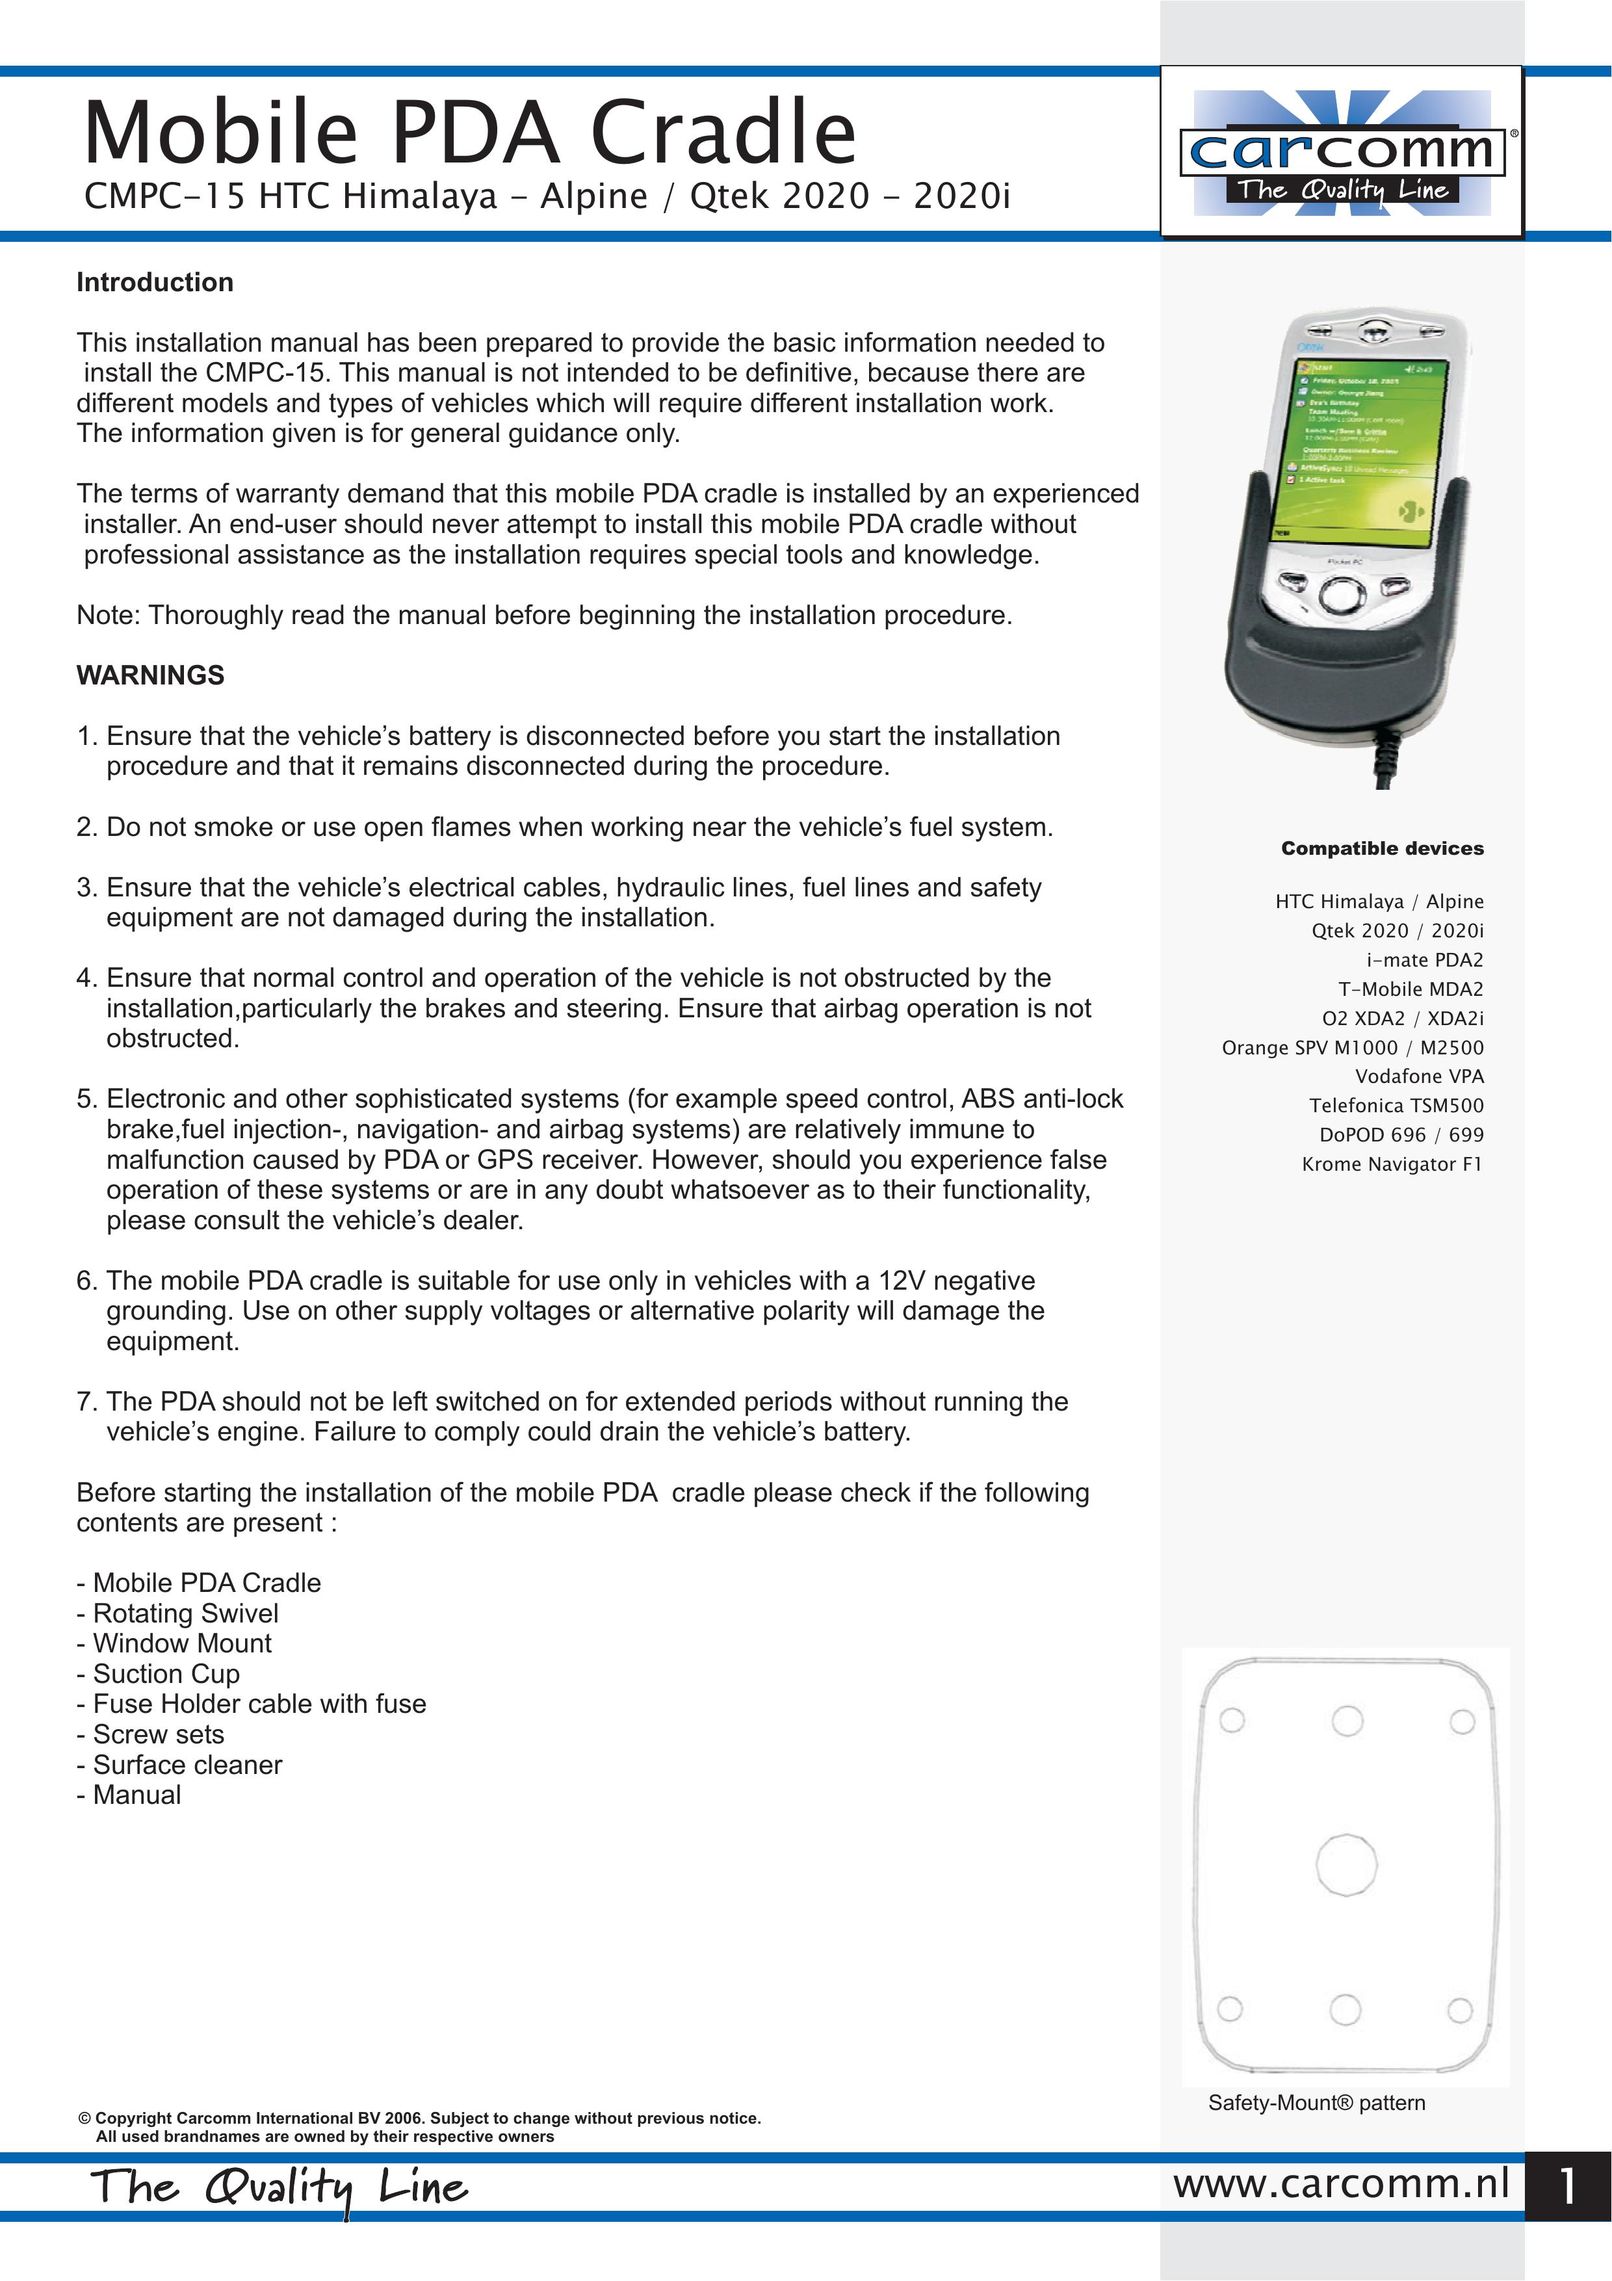 Carcomm CMPC - 15 HTC Himalaya - Alpine / Qtek 2020 - 2020i Cell Phone Accessories User Manual